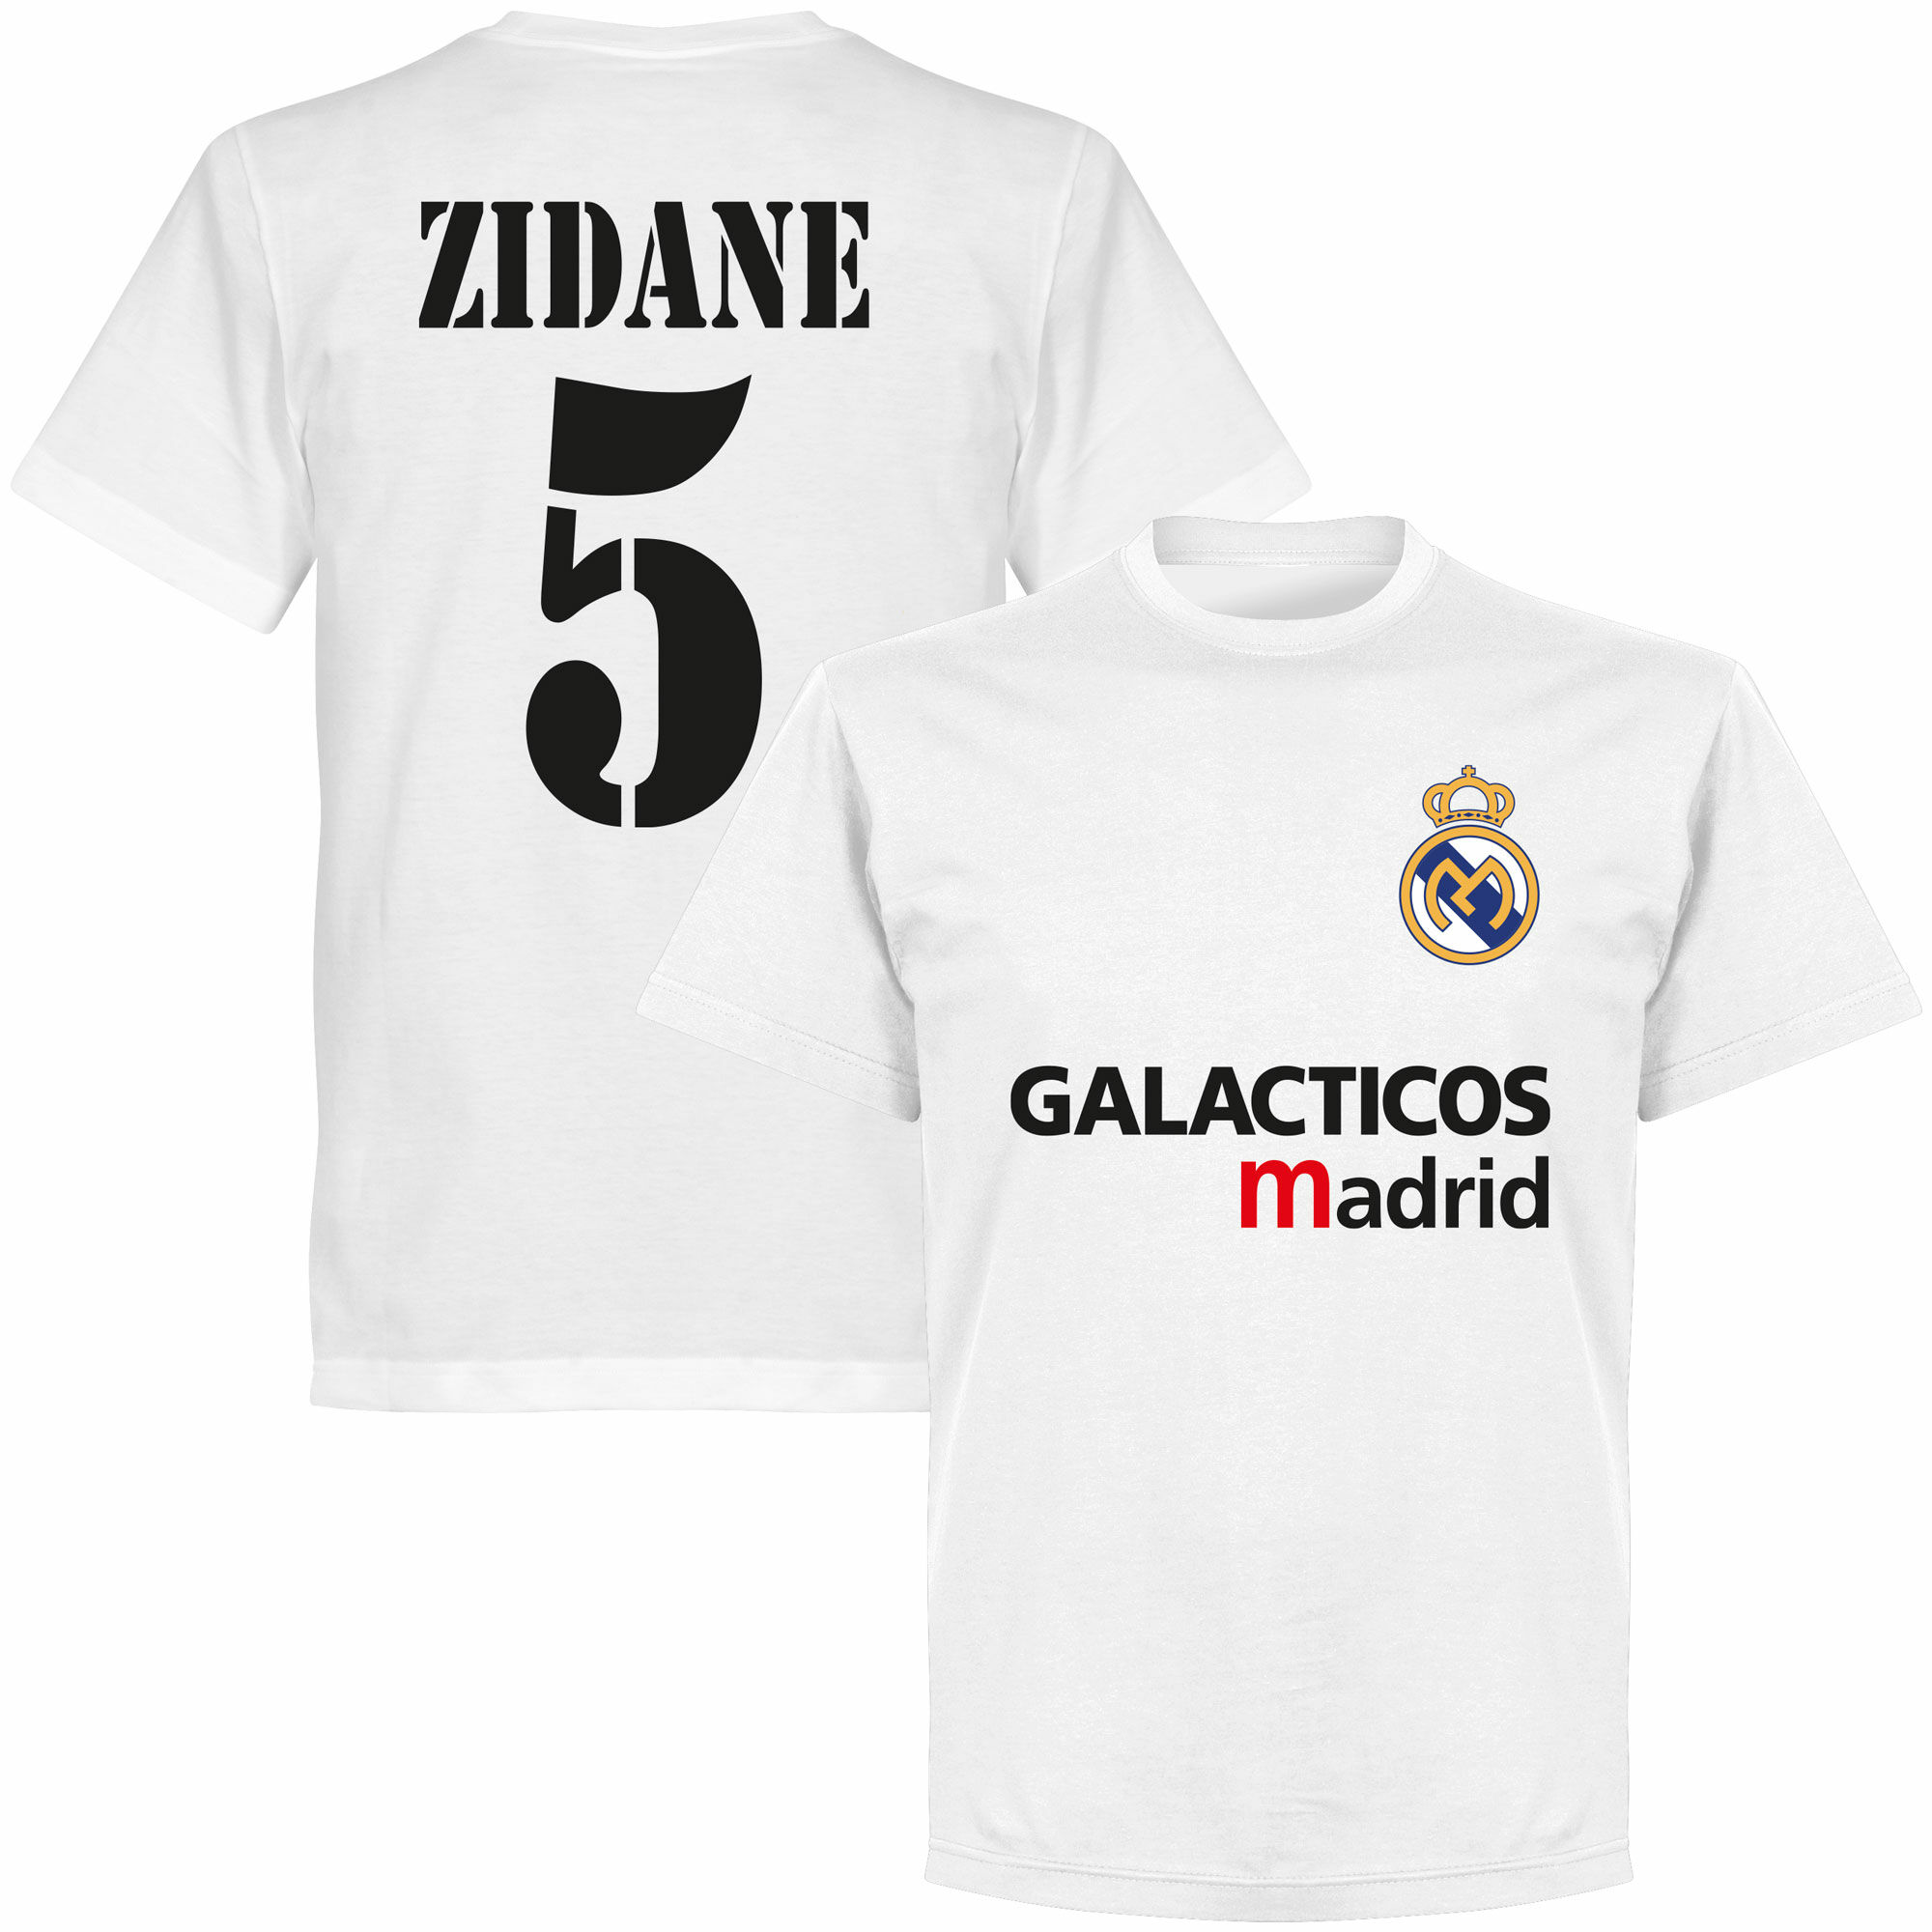 Real Madrid - Tričko "Galácticos Madrid" - bílé, Zinédine Zidane, číslo 5